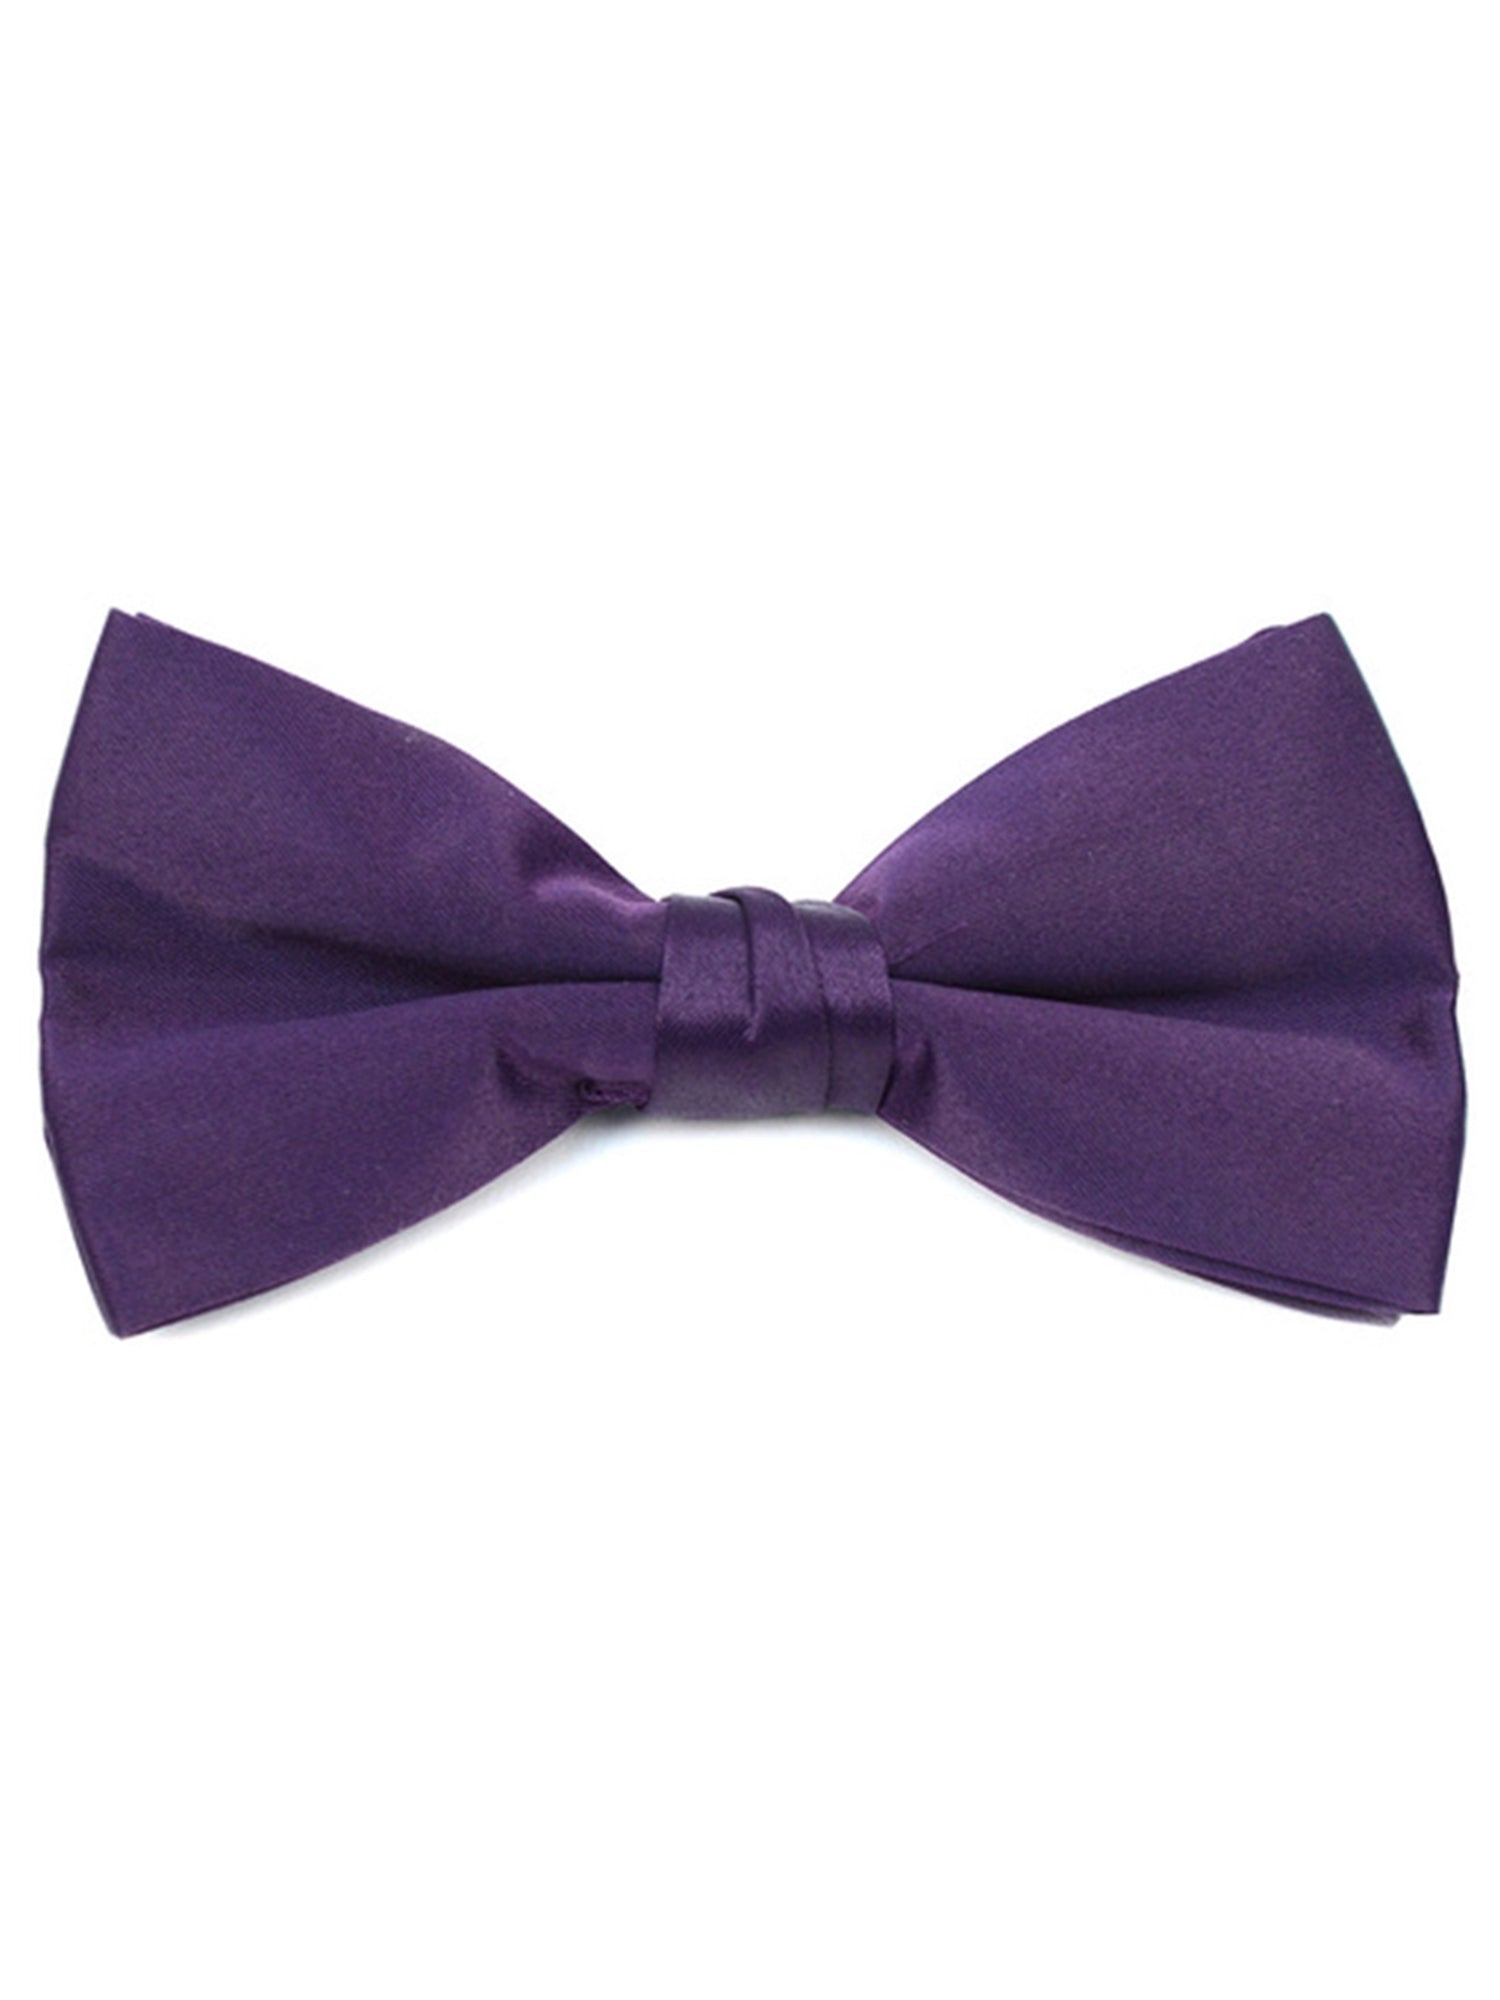 Men's Pre-tied Clip On Bow Tie - Formal Tuxedo Solid Color Men's Solid Color Bow Tie TheDapperTie Dark Purple One Size 